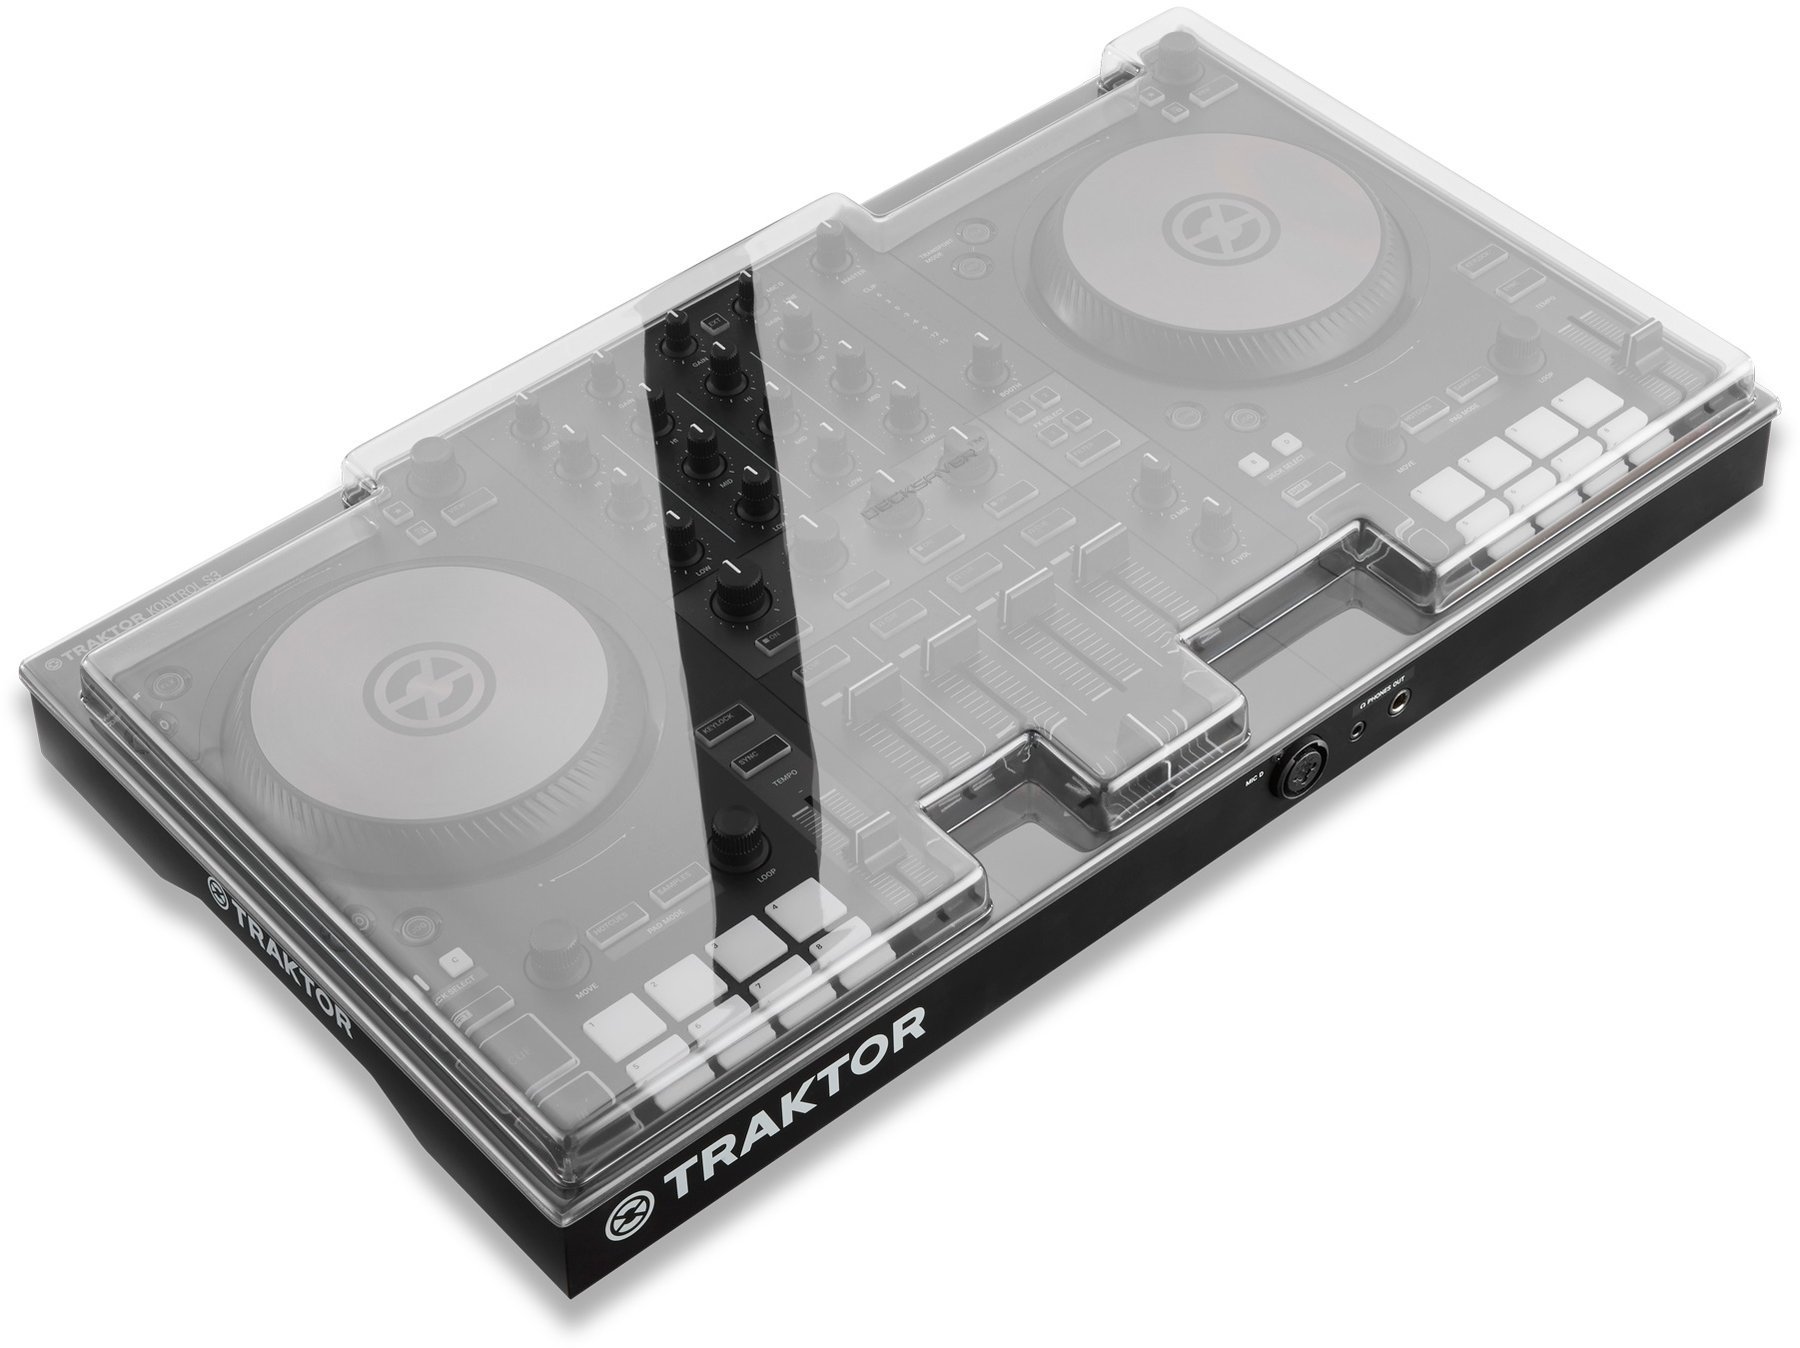 Ochranný kryt pro DJ kontroler Decksaver Native Instruments Kontrol S3